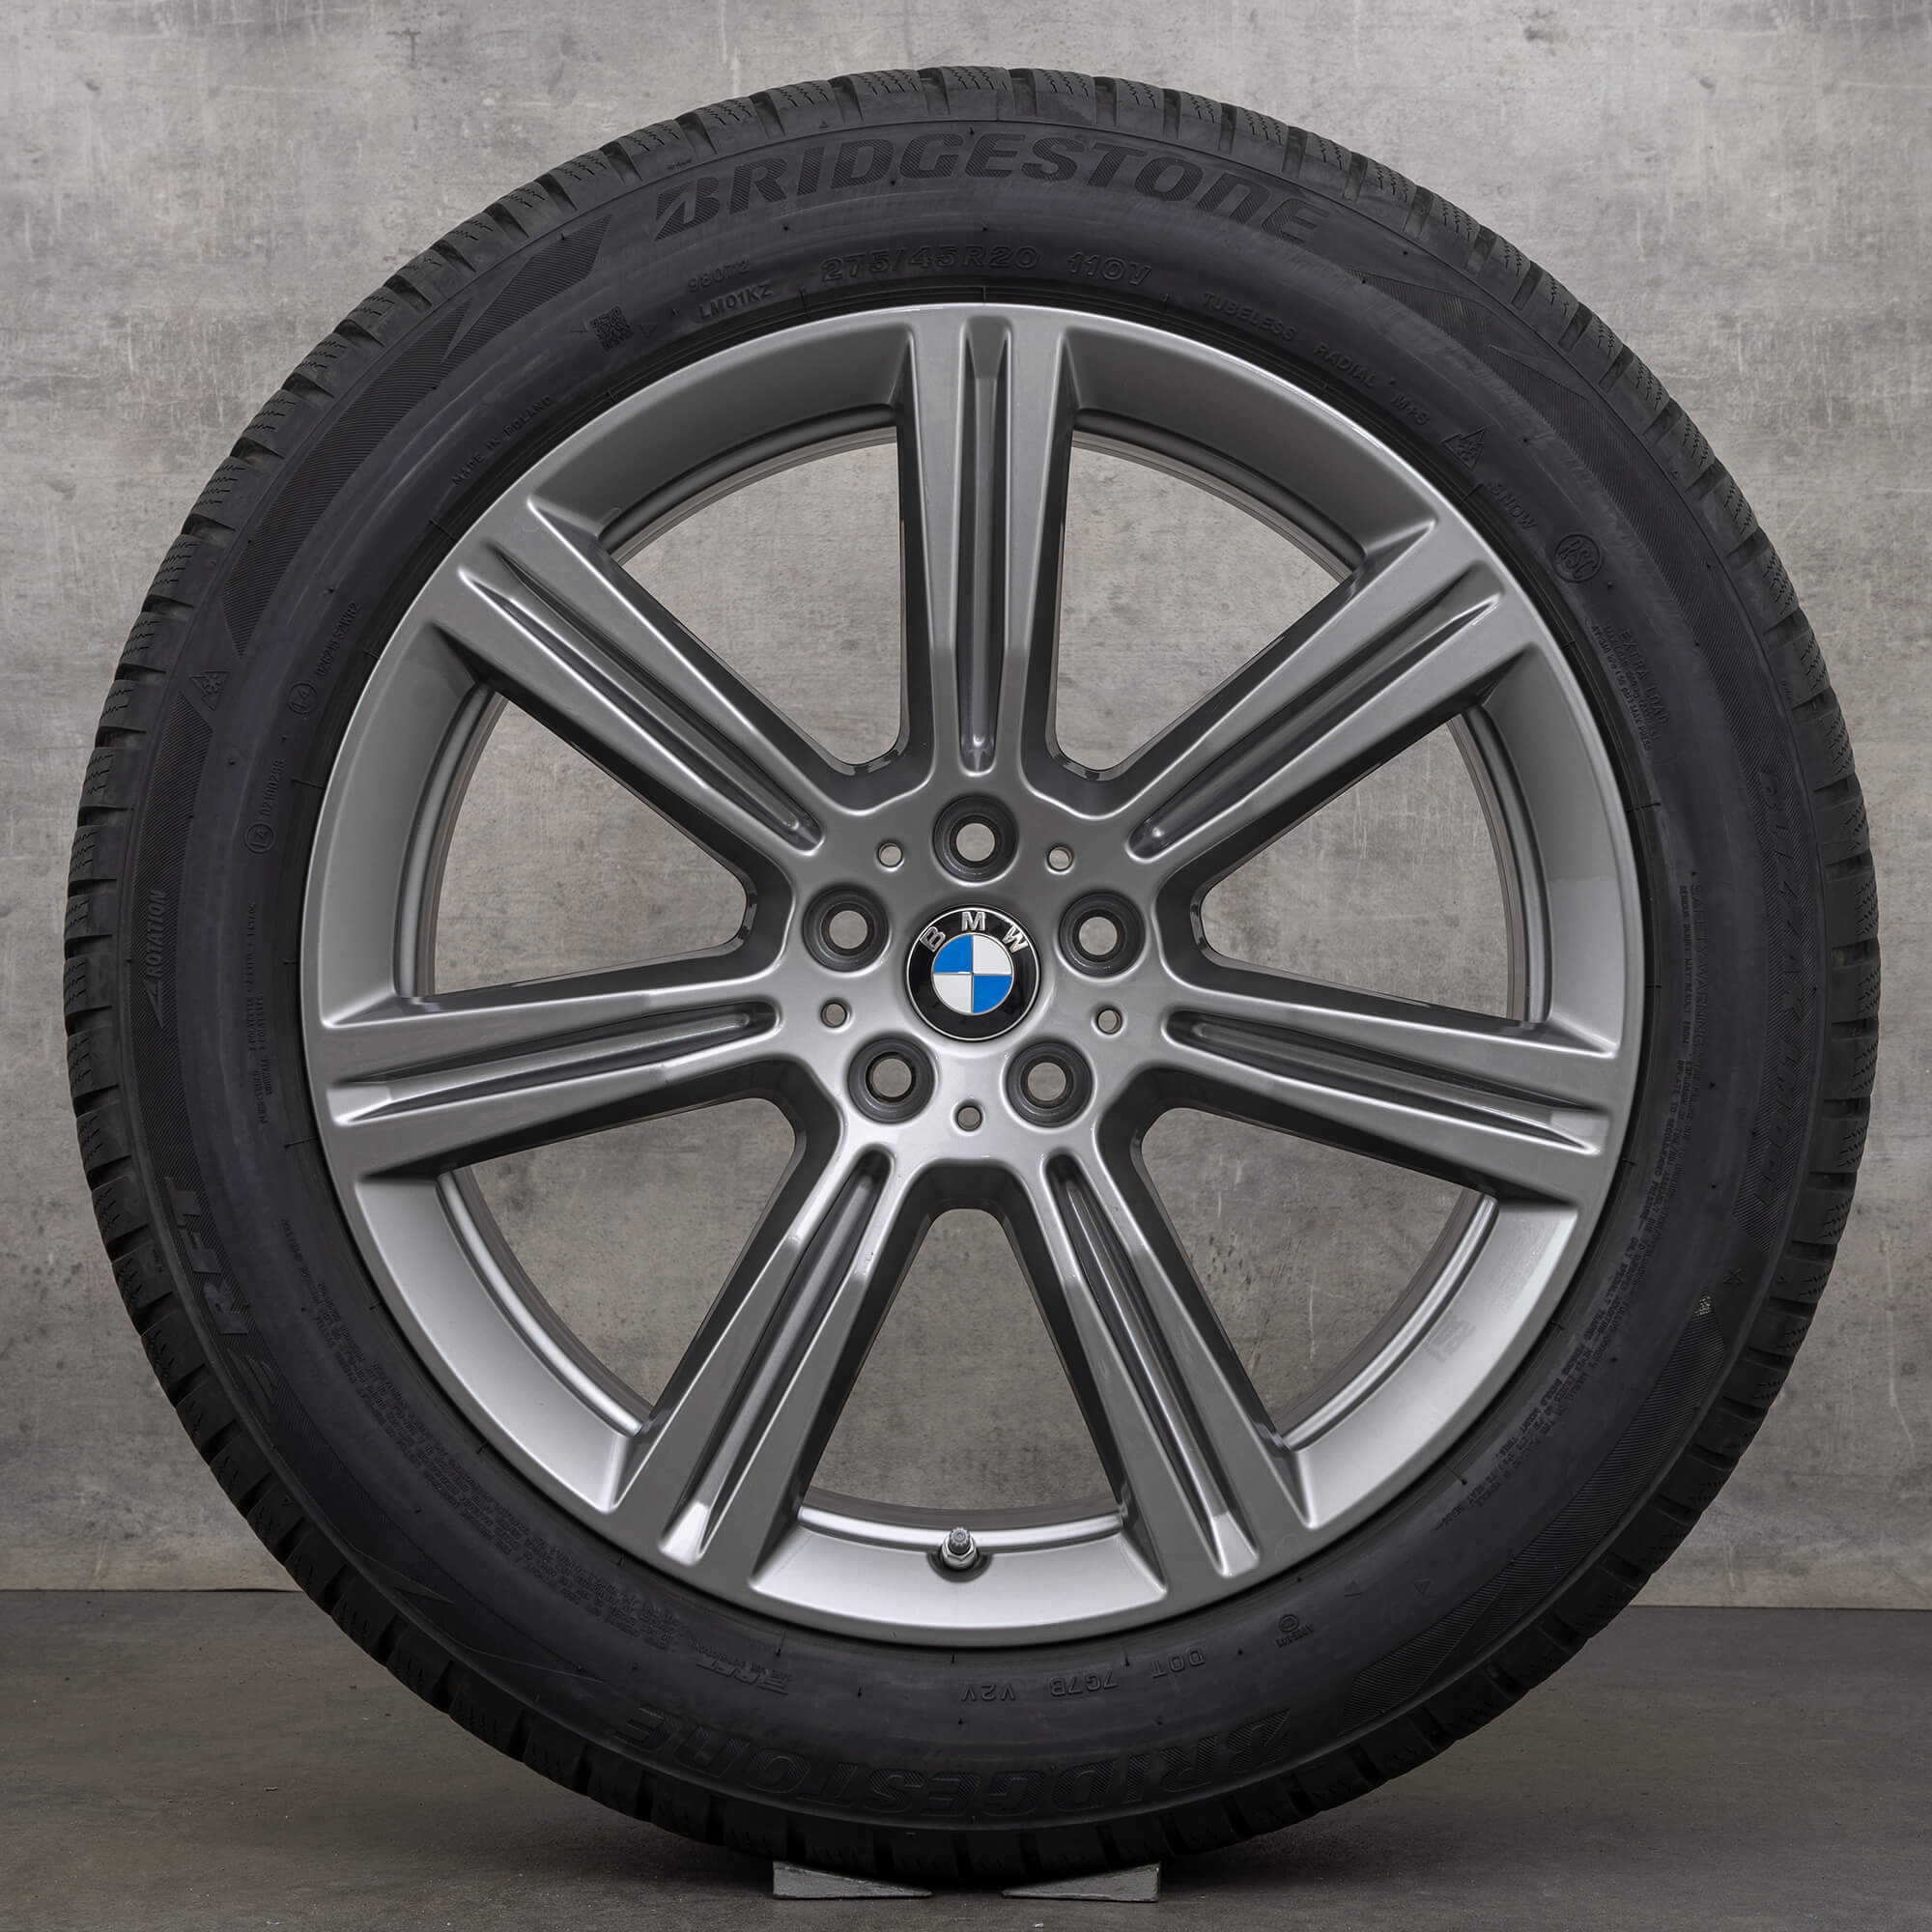 BMW X6 G06 X5 G05 winter wheels 20 inch rims tires 6883753 Styling 736